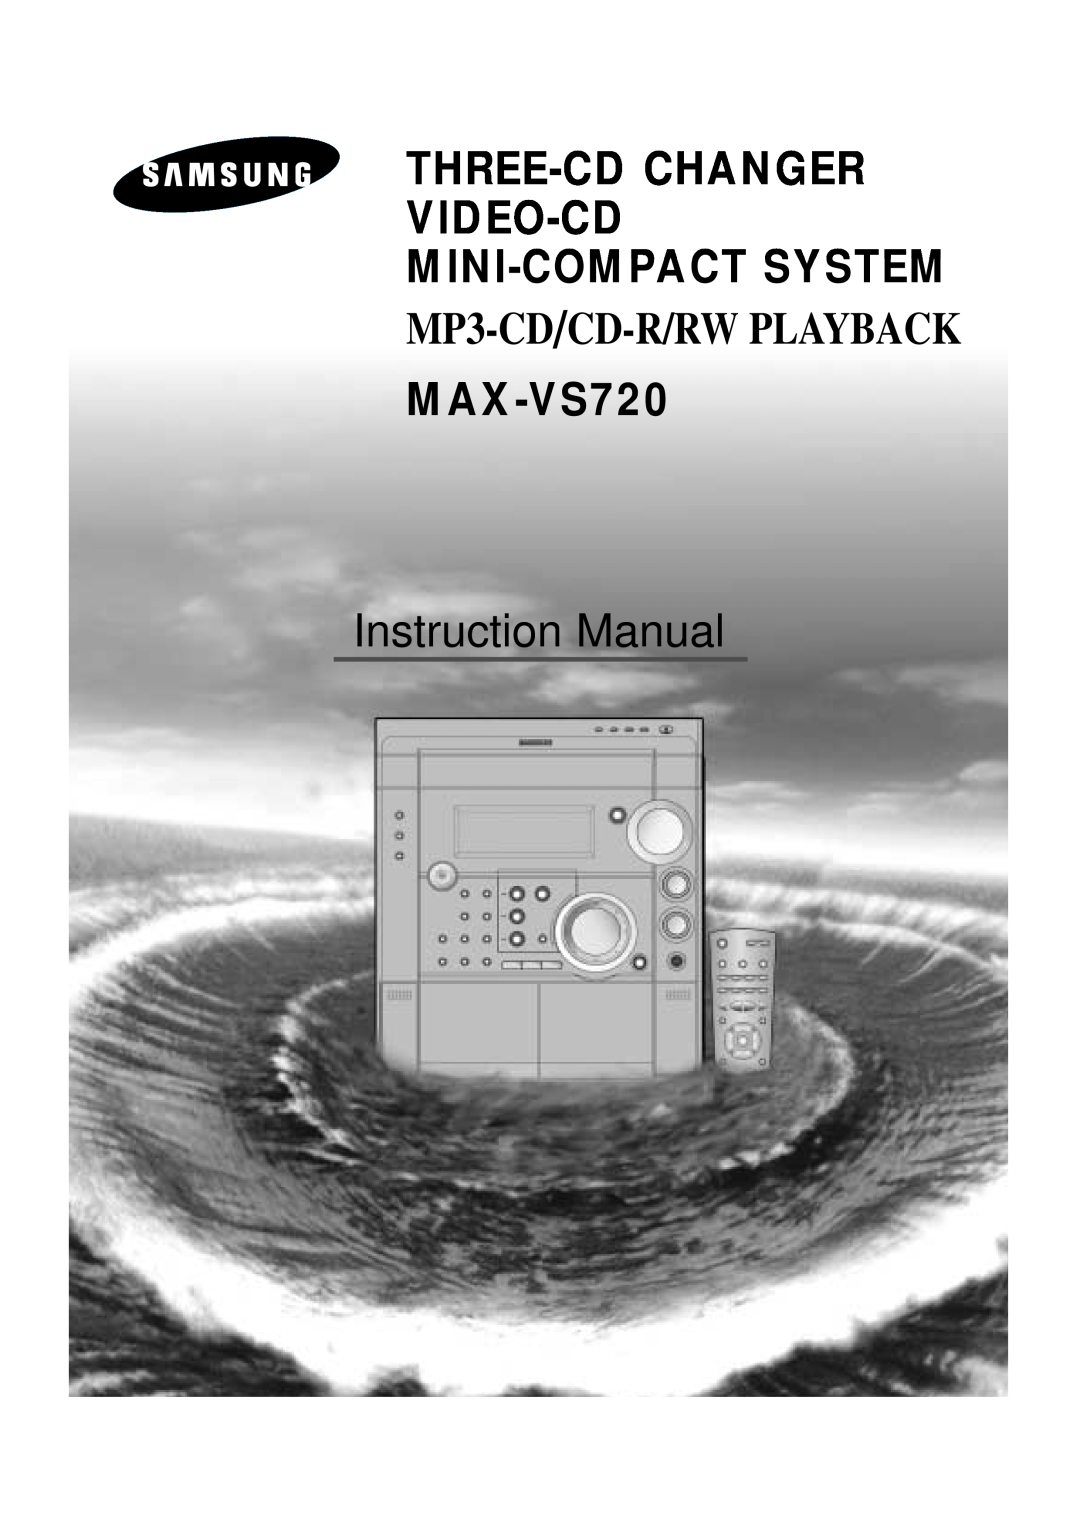 Samsung MAX-VS720 instruction manual Three-Cdchanger Video-Cd Mini-Compactsystem, MP3-CD/CD-R/RWPLAYBACK 